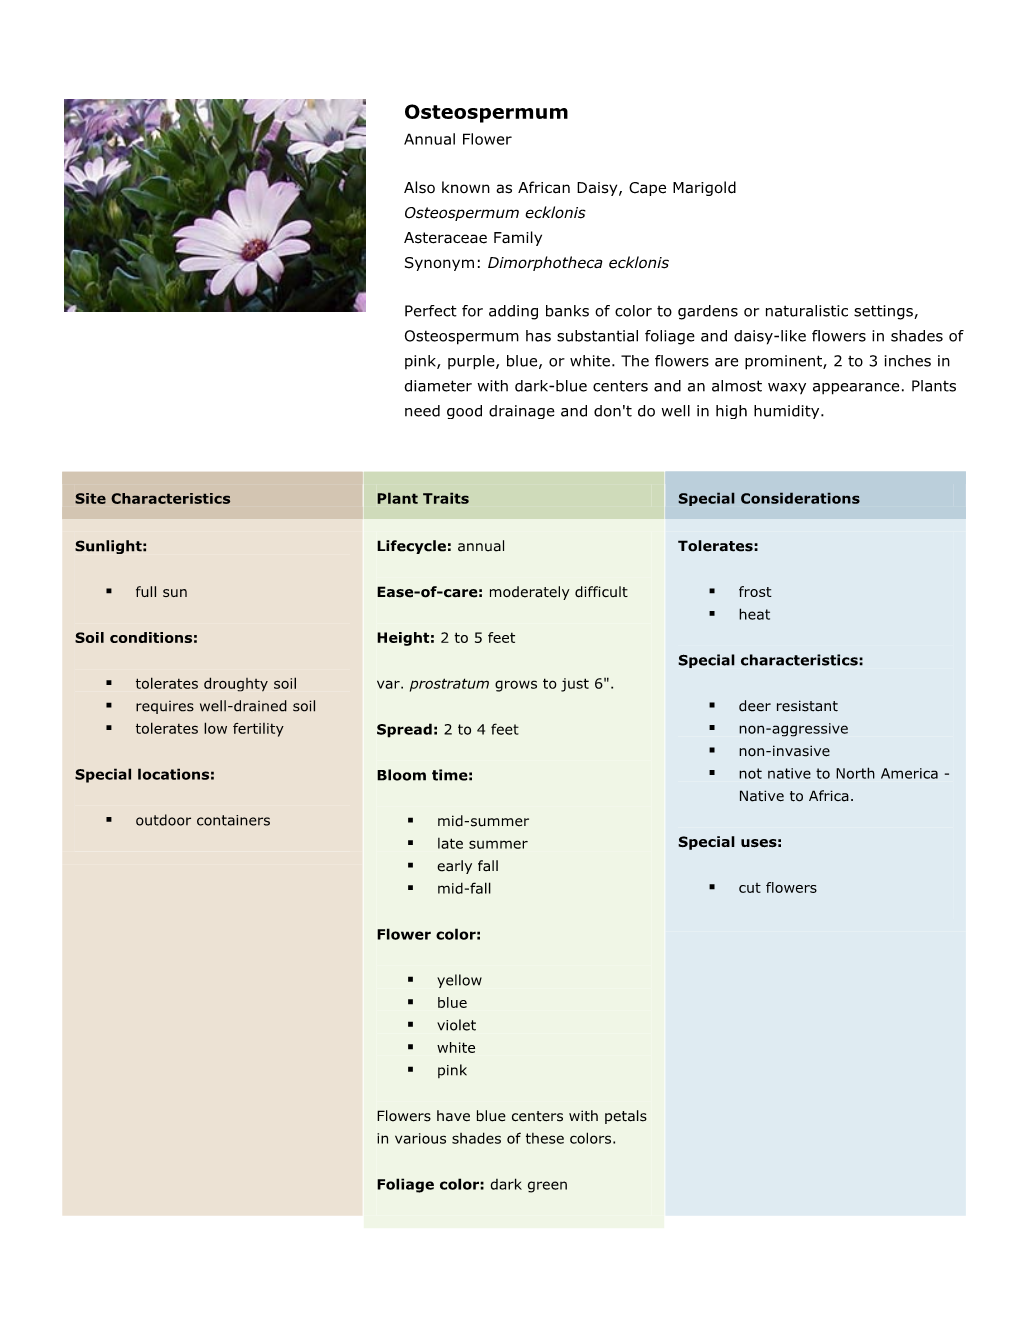 Osteospermum Annual Flower